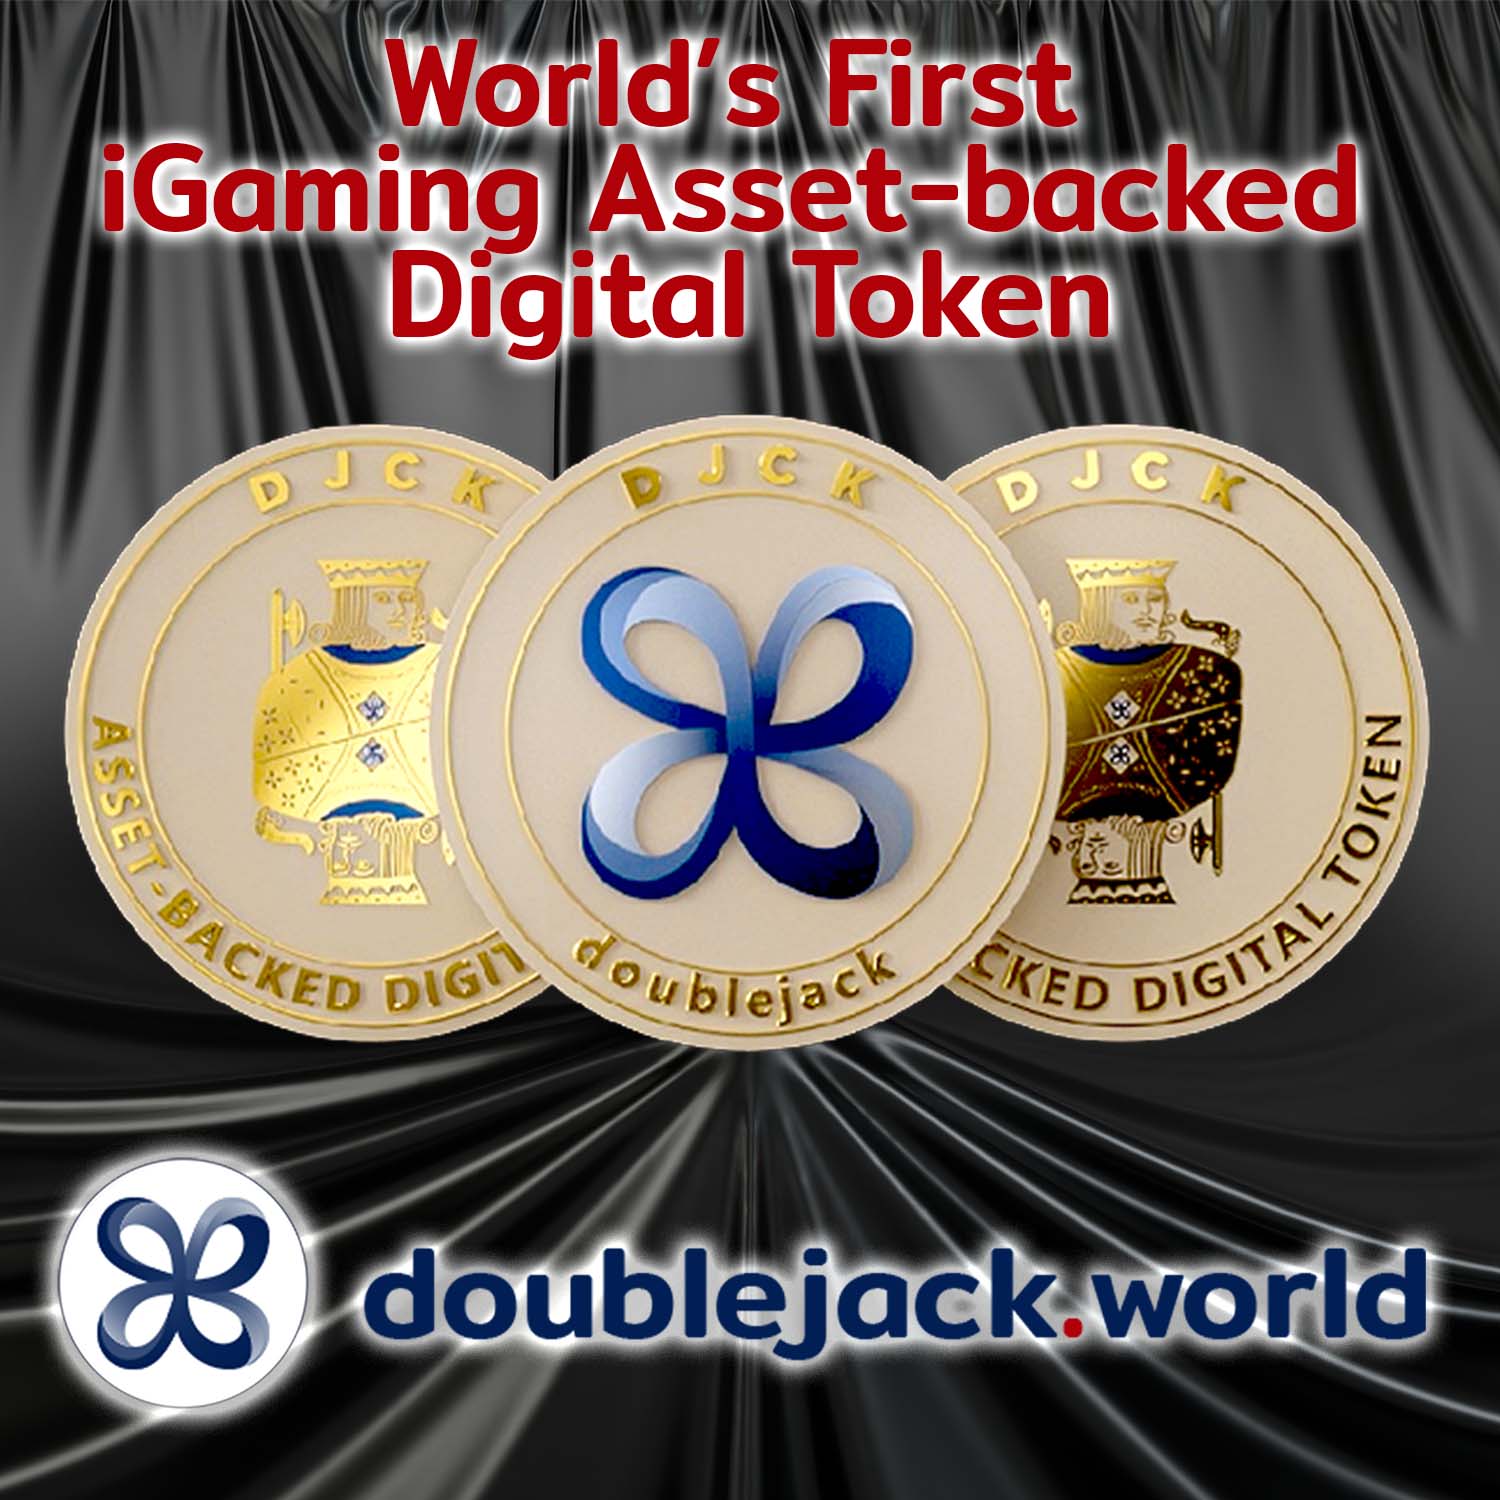 To token sale: doublejack.world